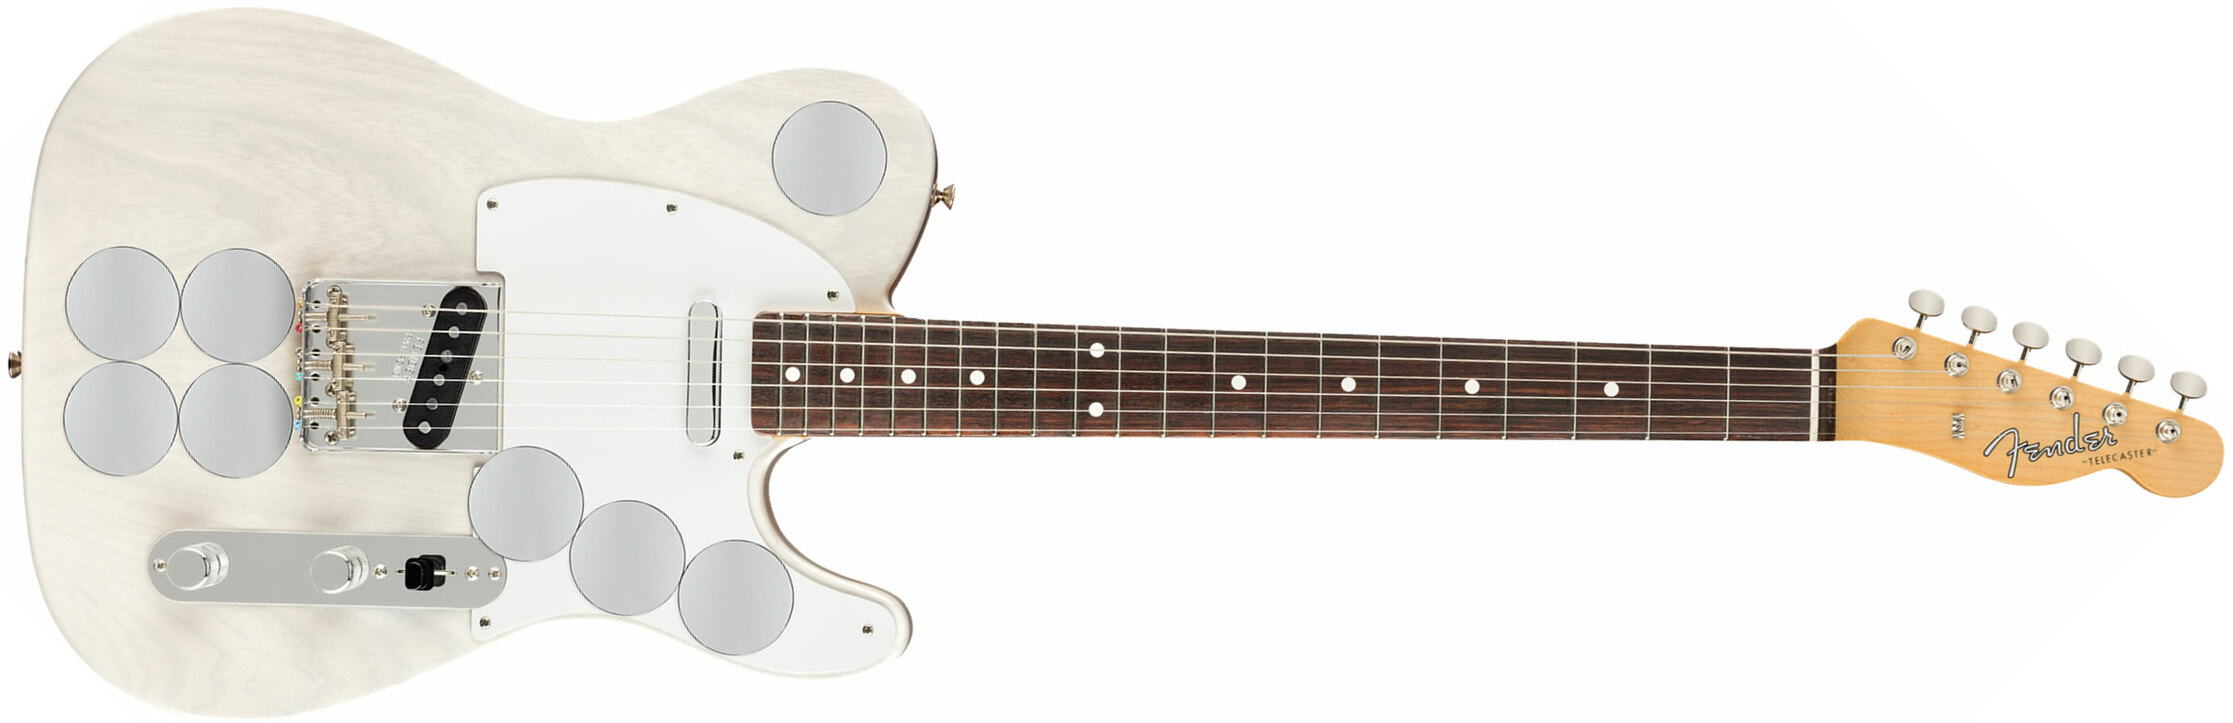 Fender Telecaster Mirror Jimmy Page Us Rw - White Blonde - E-Gitarre in Teleform - Main picture